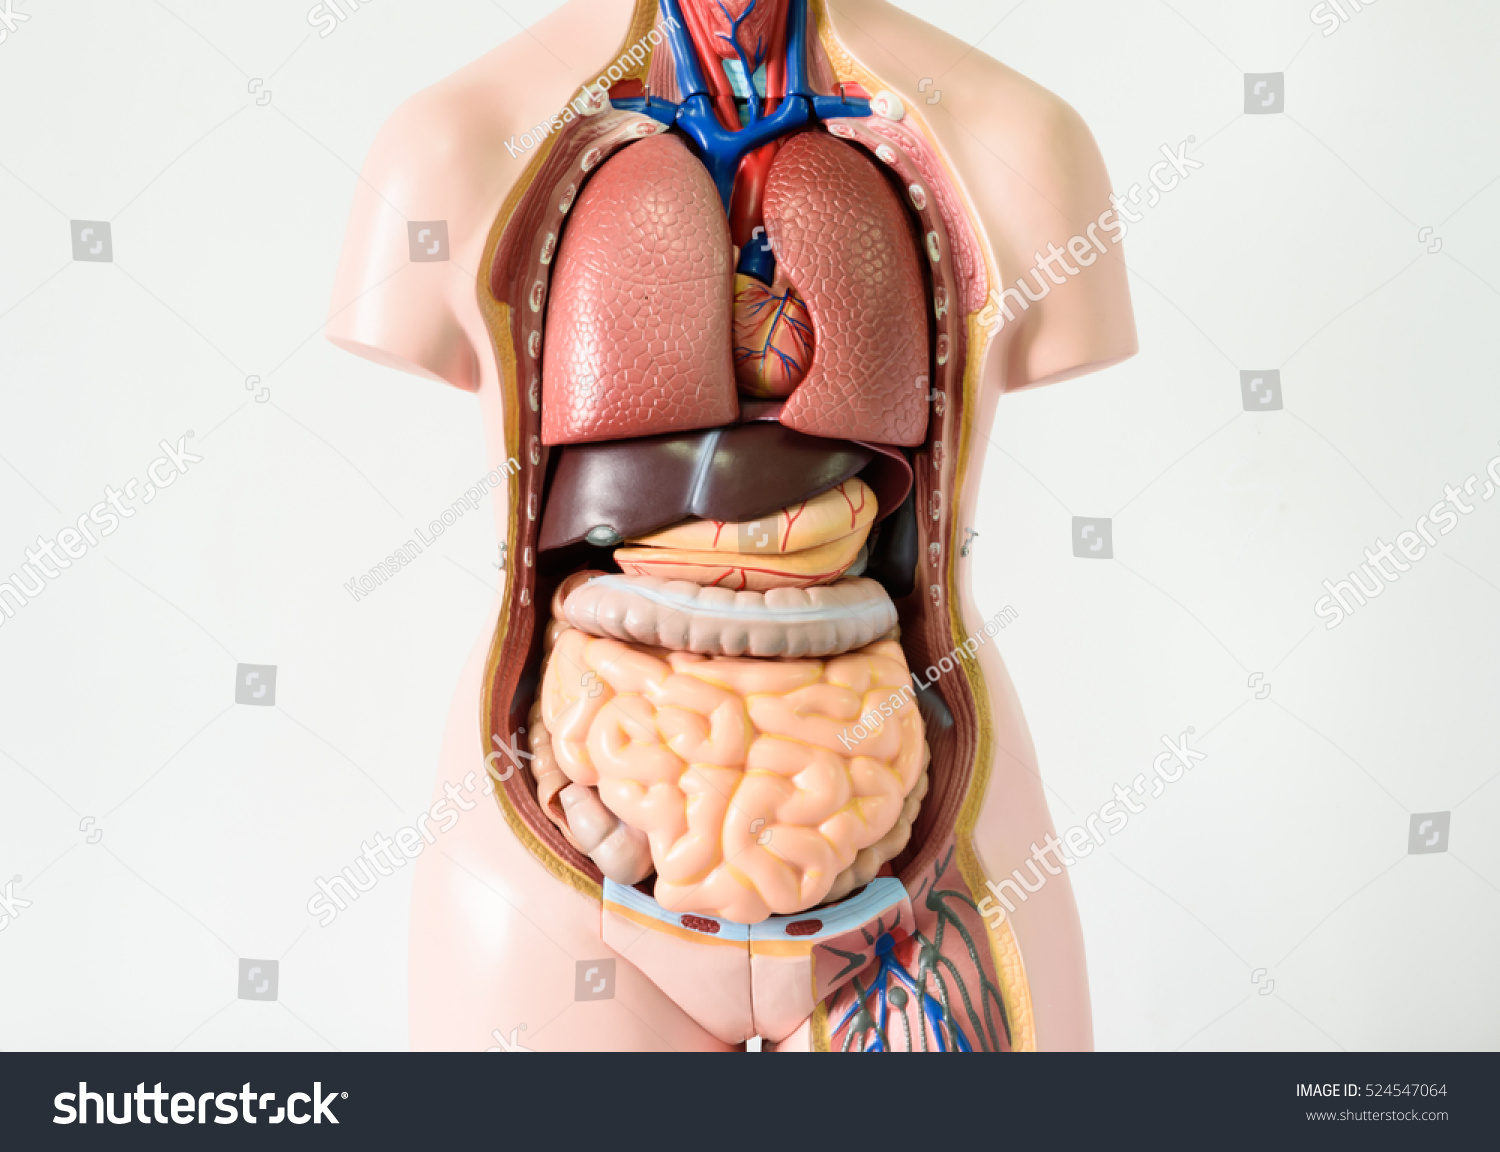 Anatomy Human Body Model On White Stock Photo Edit Now